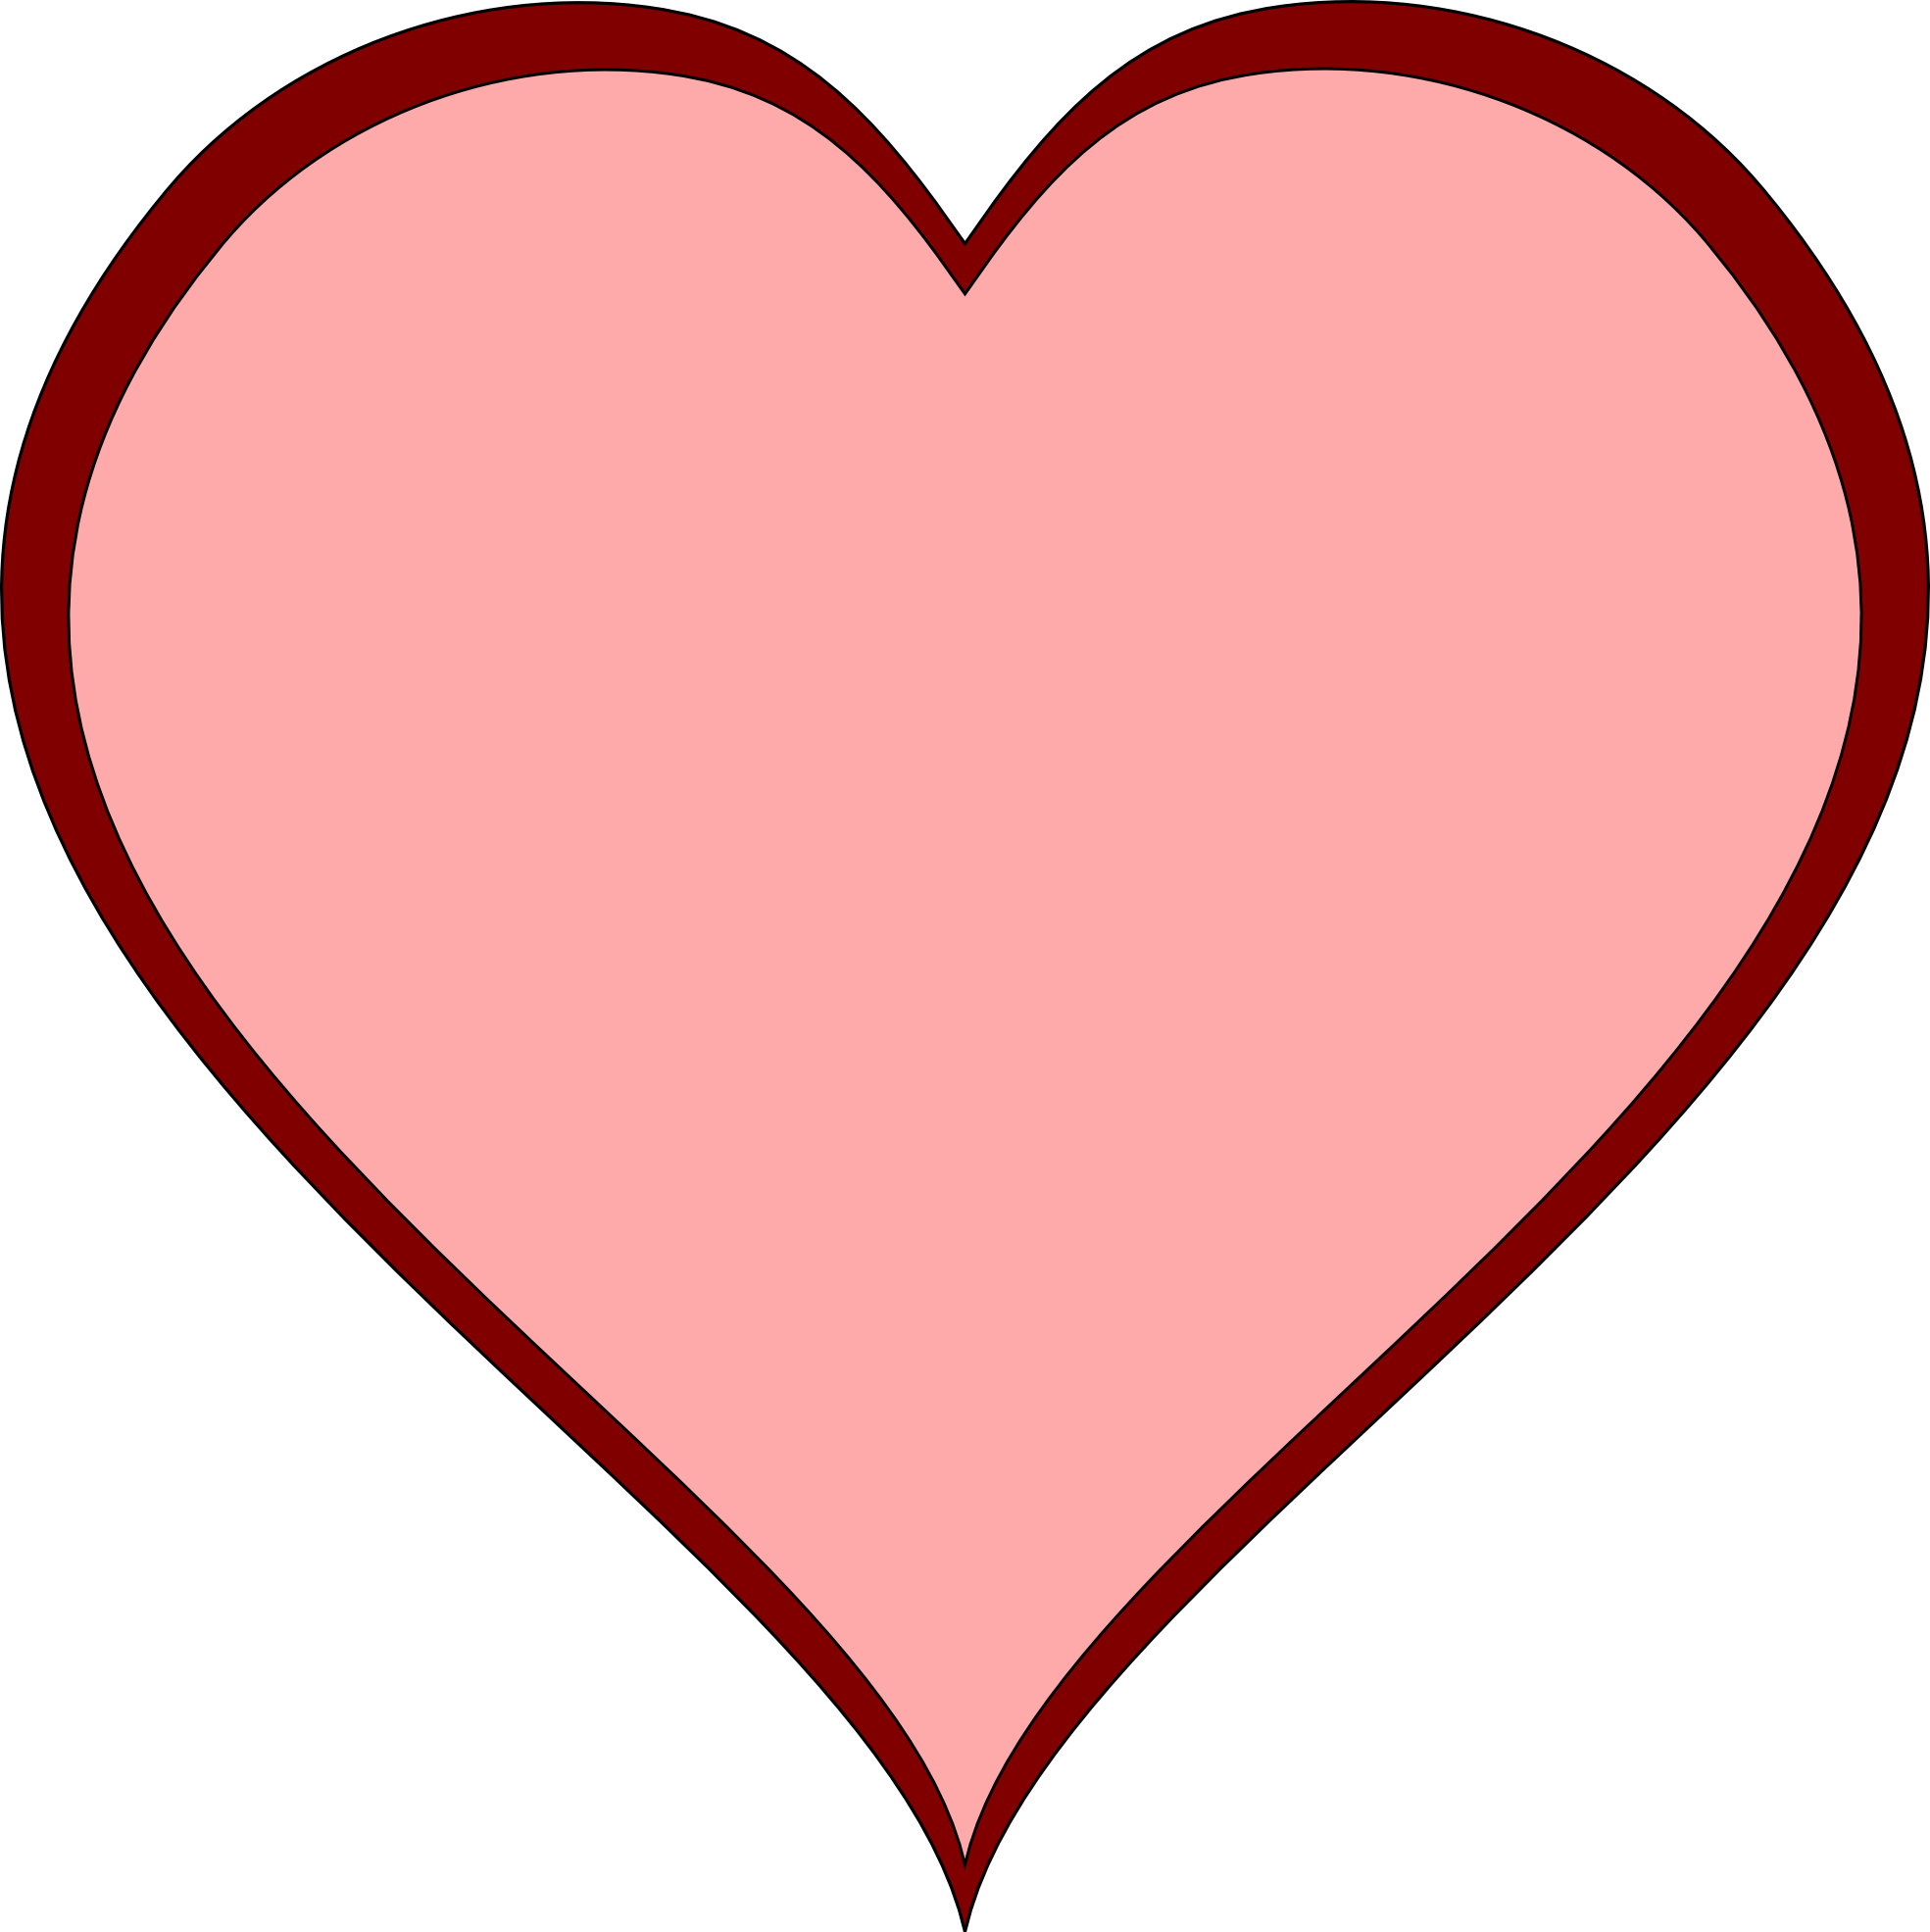 clipart vector heart - photo #9